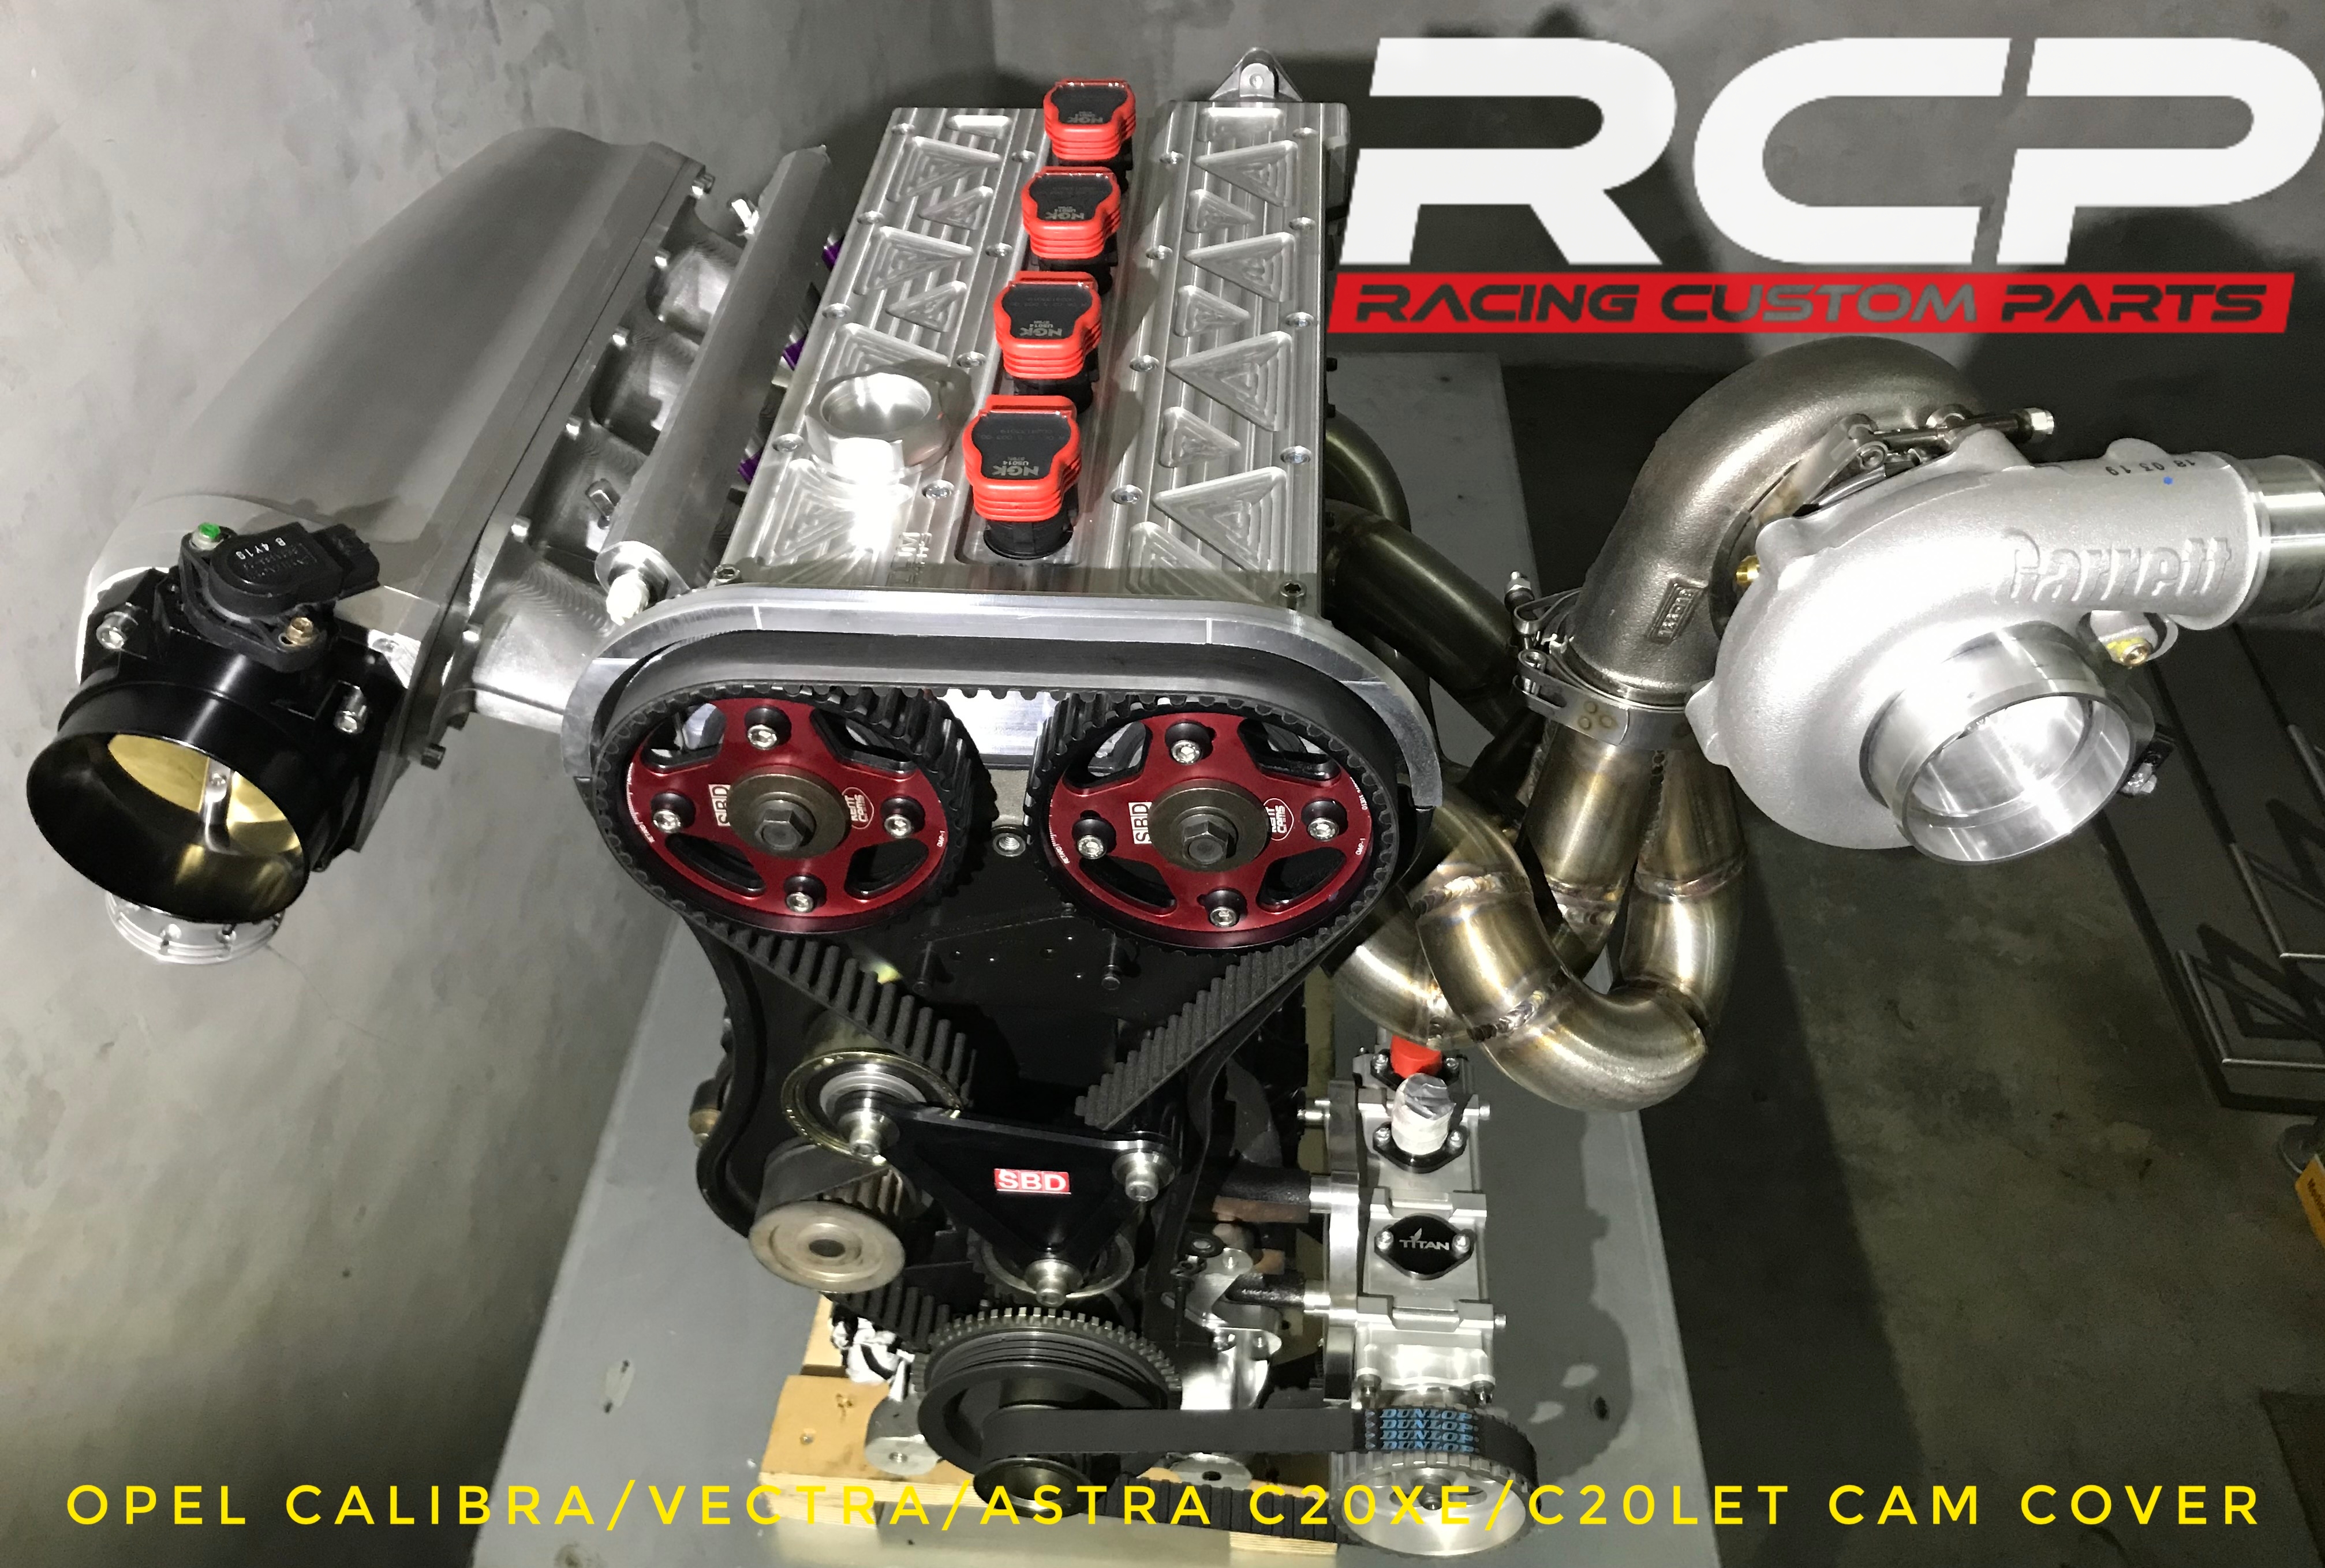 opel calibra vectra astra c20xe c20let turbo billet cnc cam cover head cover rcp racing custom parts